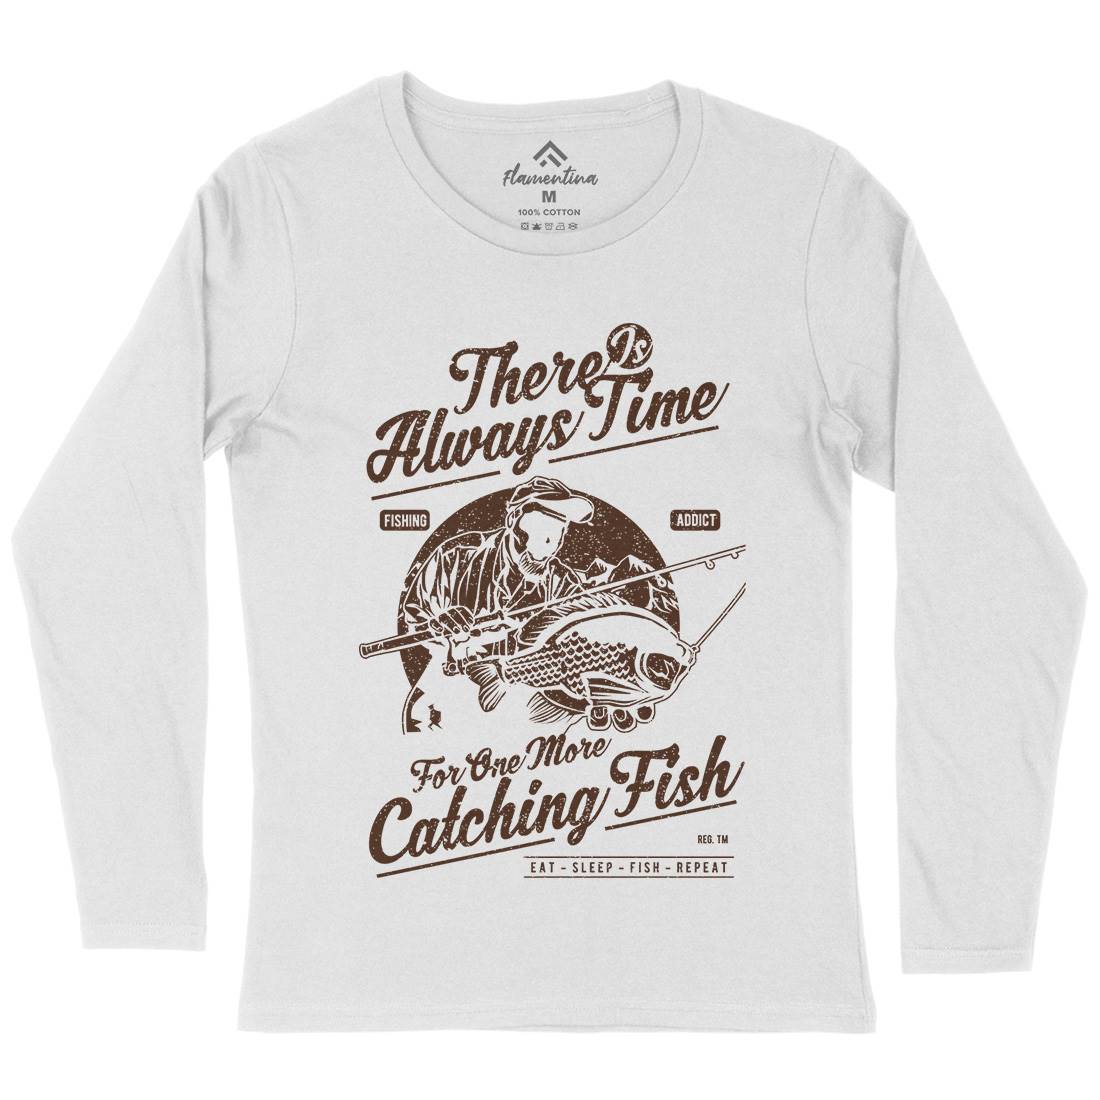 One More Catching Womens Long Sleeve T-Shirt Fishing A731